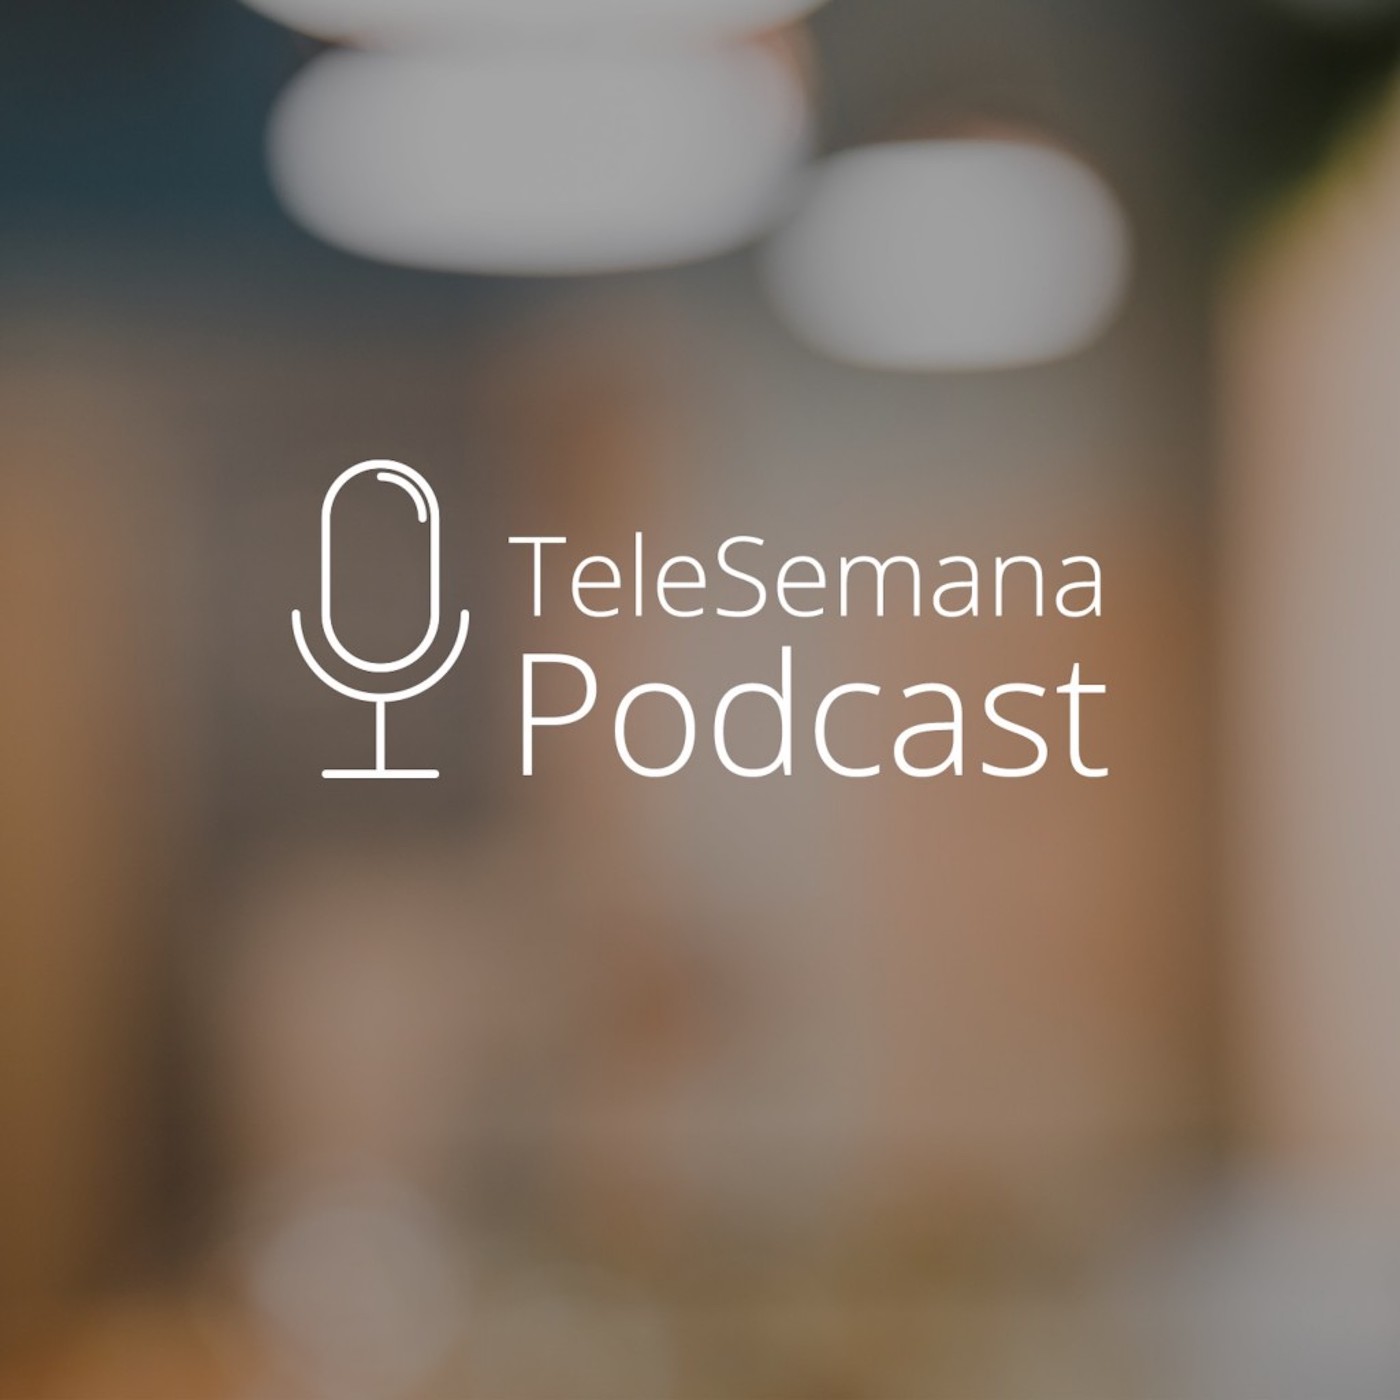 TeleSemana Podcast